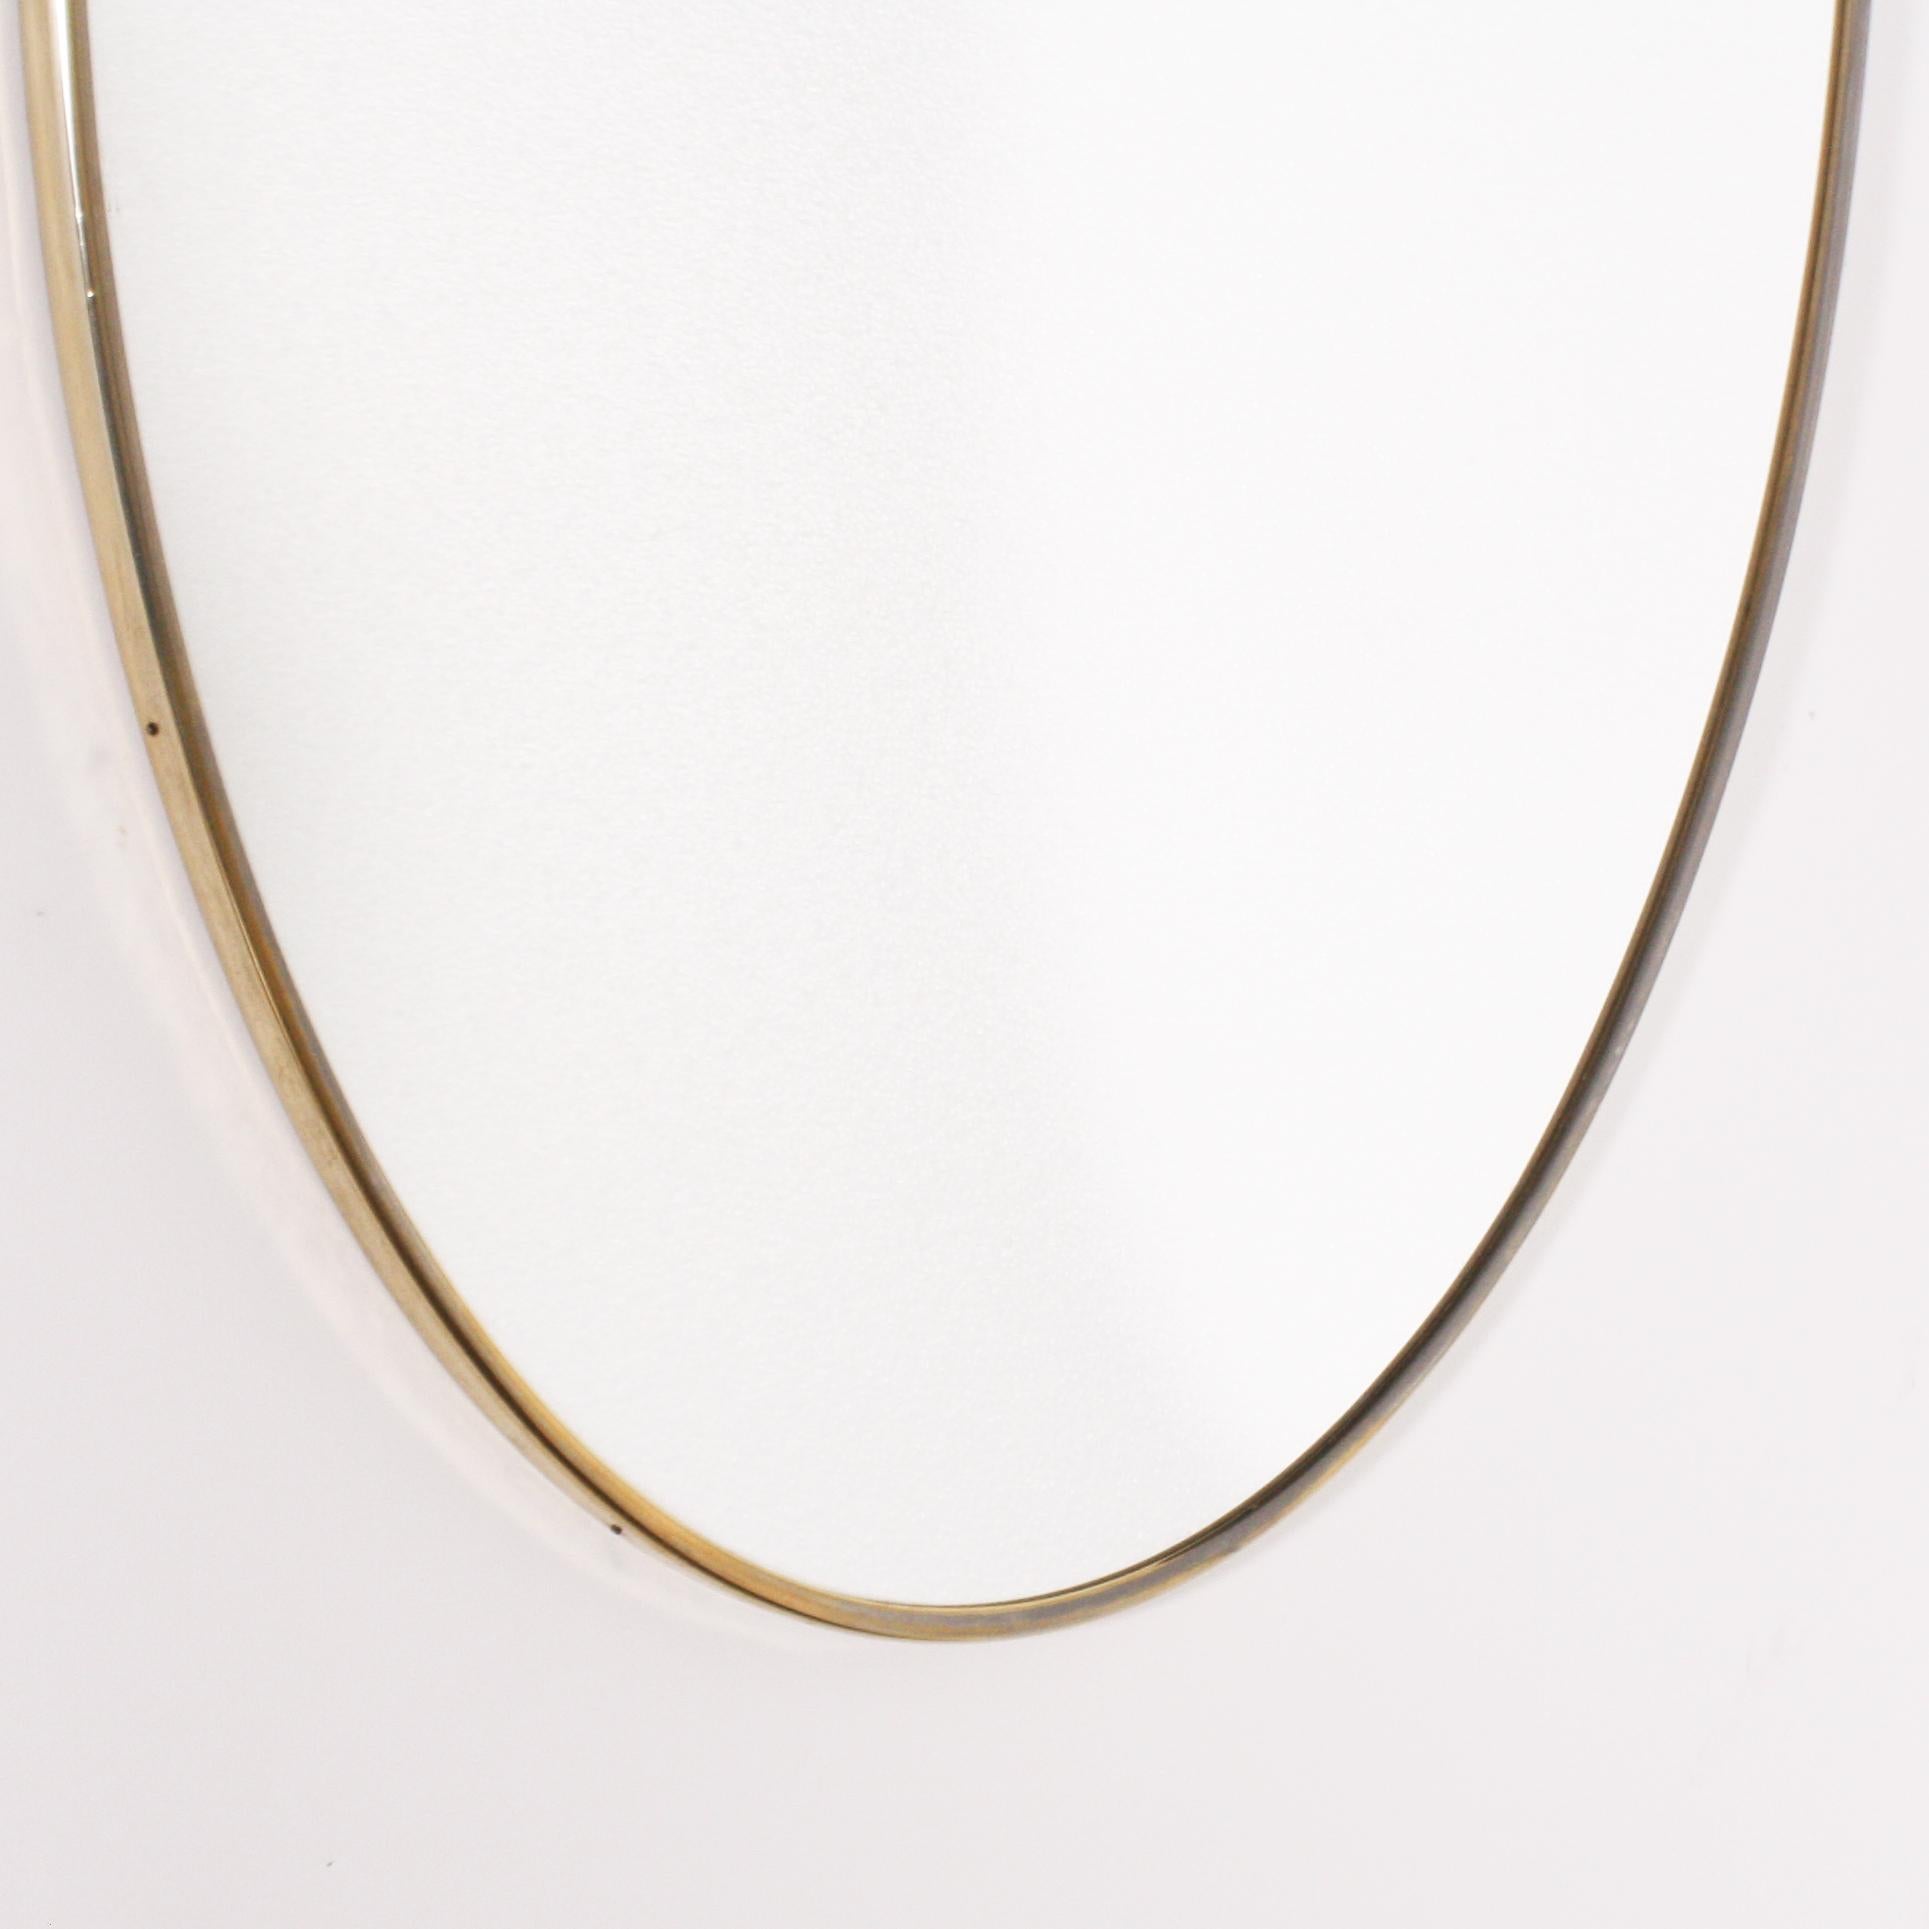 Italian oval mirror with brass frame, circa 1950.